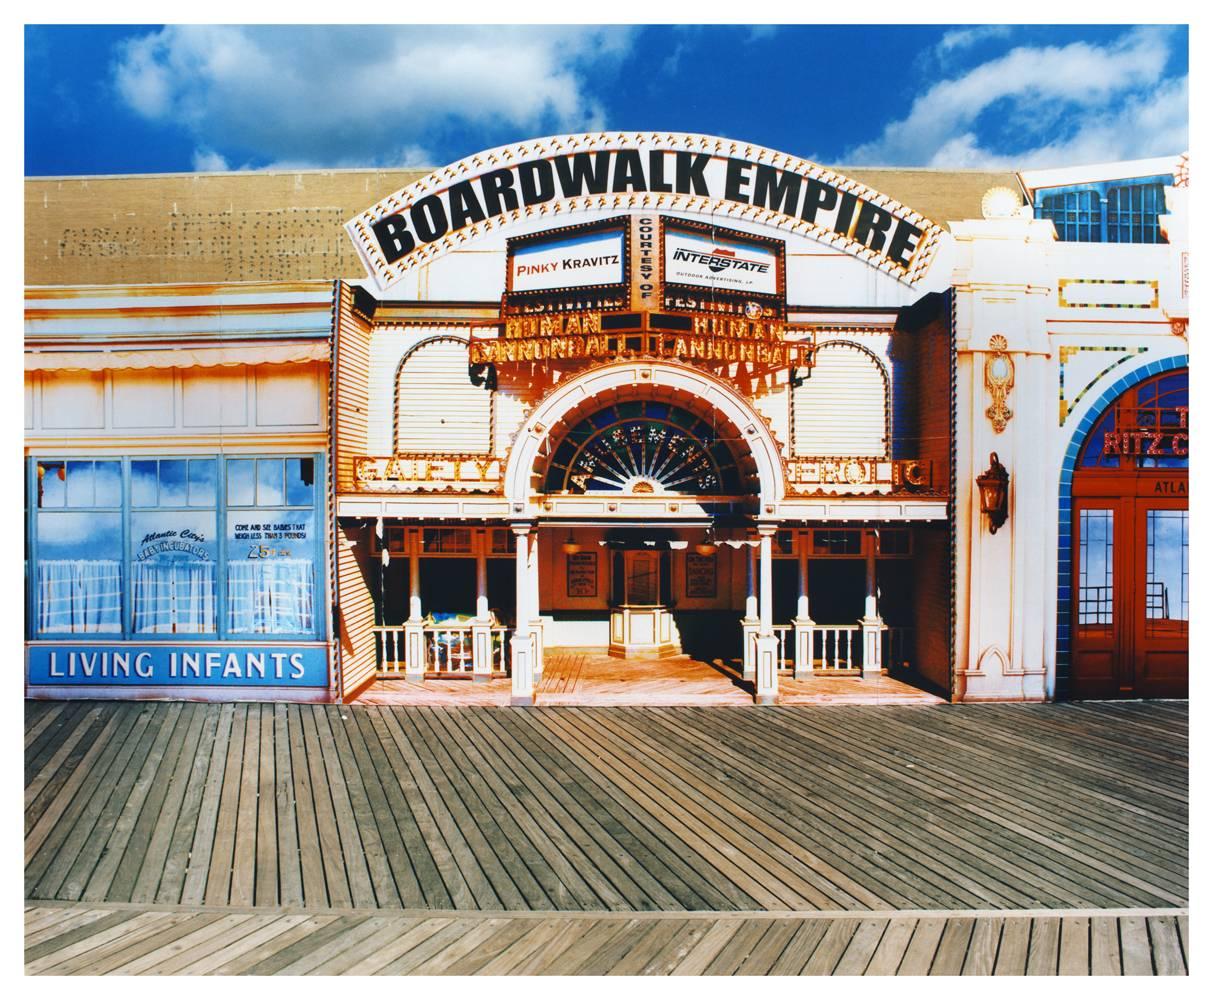 Richard Heeps Print - Boardwalk Empire in the Sun, Atlantic City, New Jersey - American Color Photo